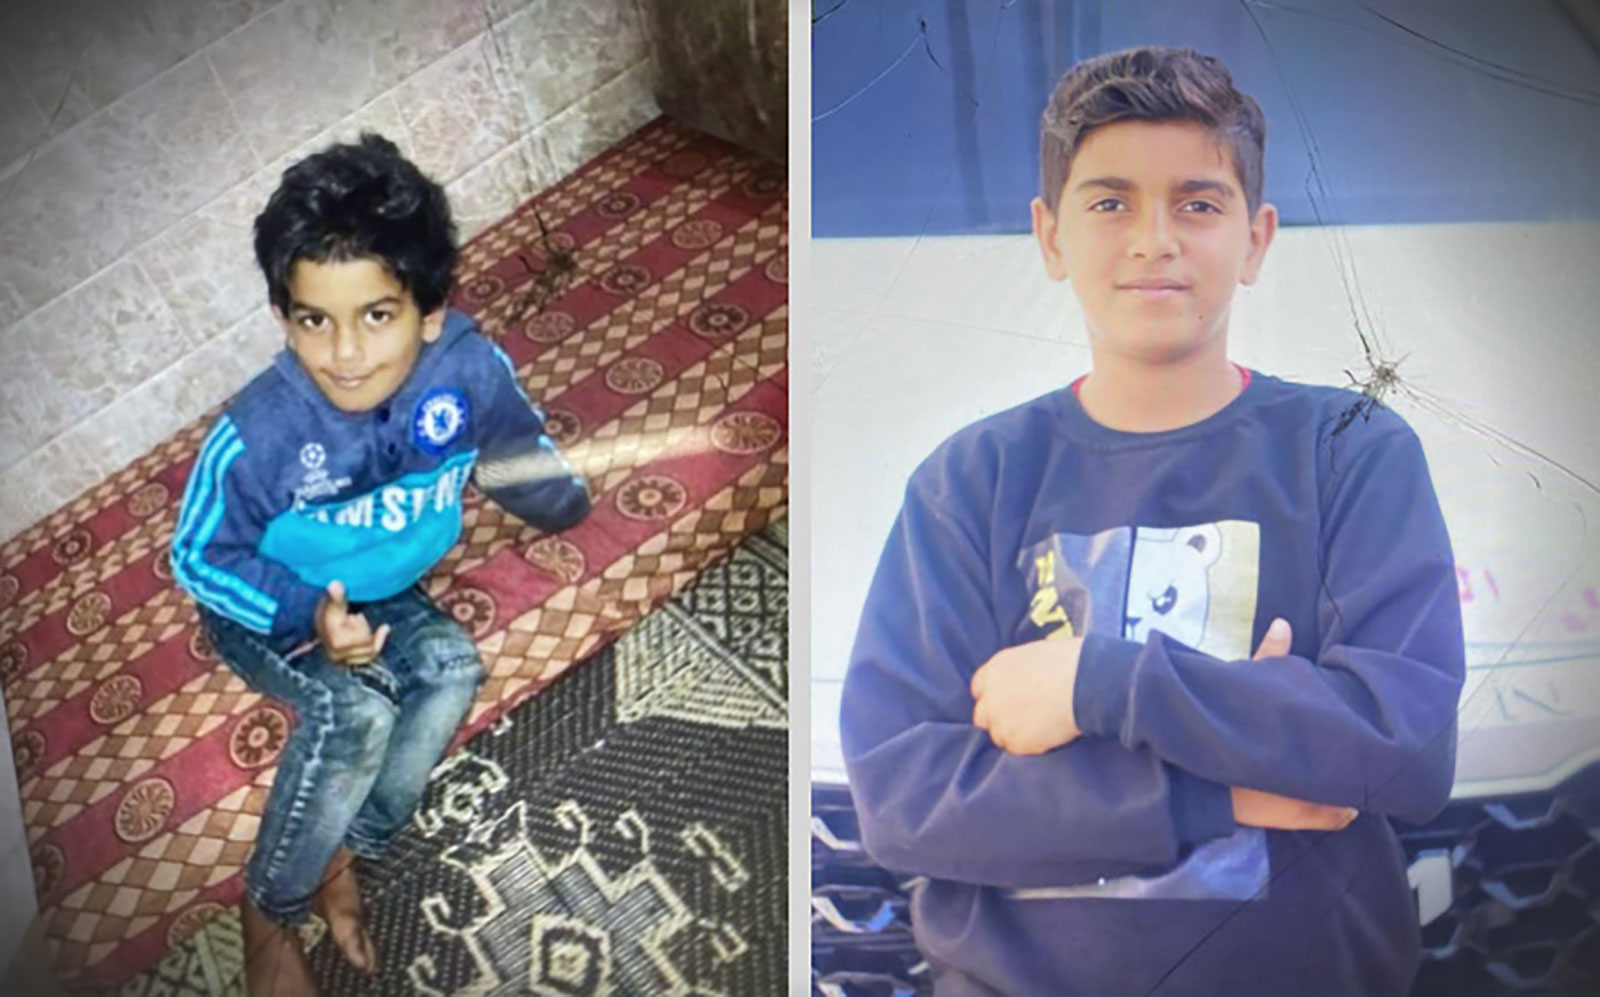 Siblings Al-Zain, 10, and Ali, 13, were among those killed. 